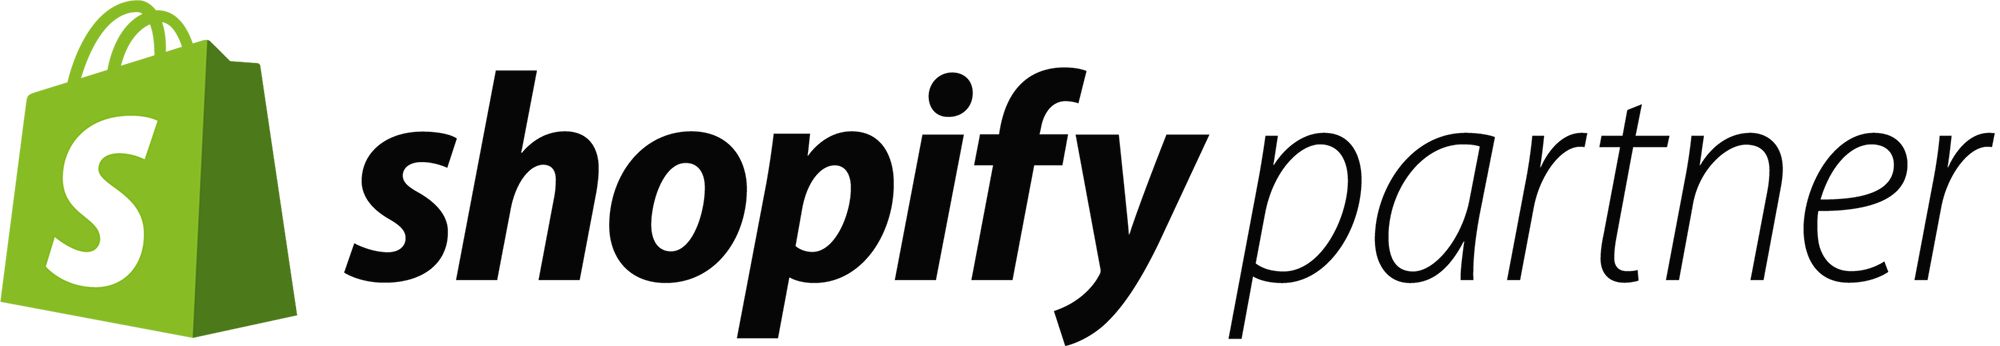 Official Shopify Partner Logo - Hires